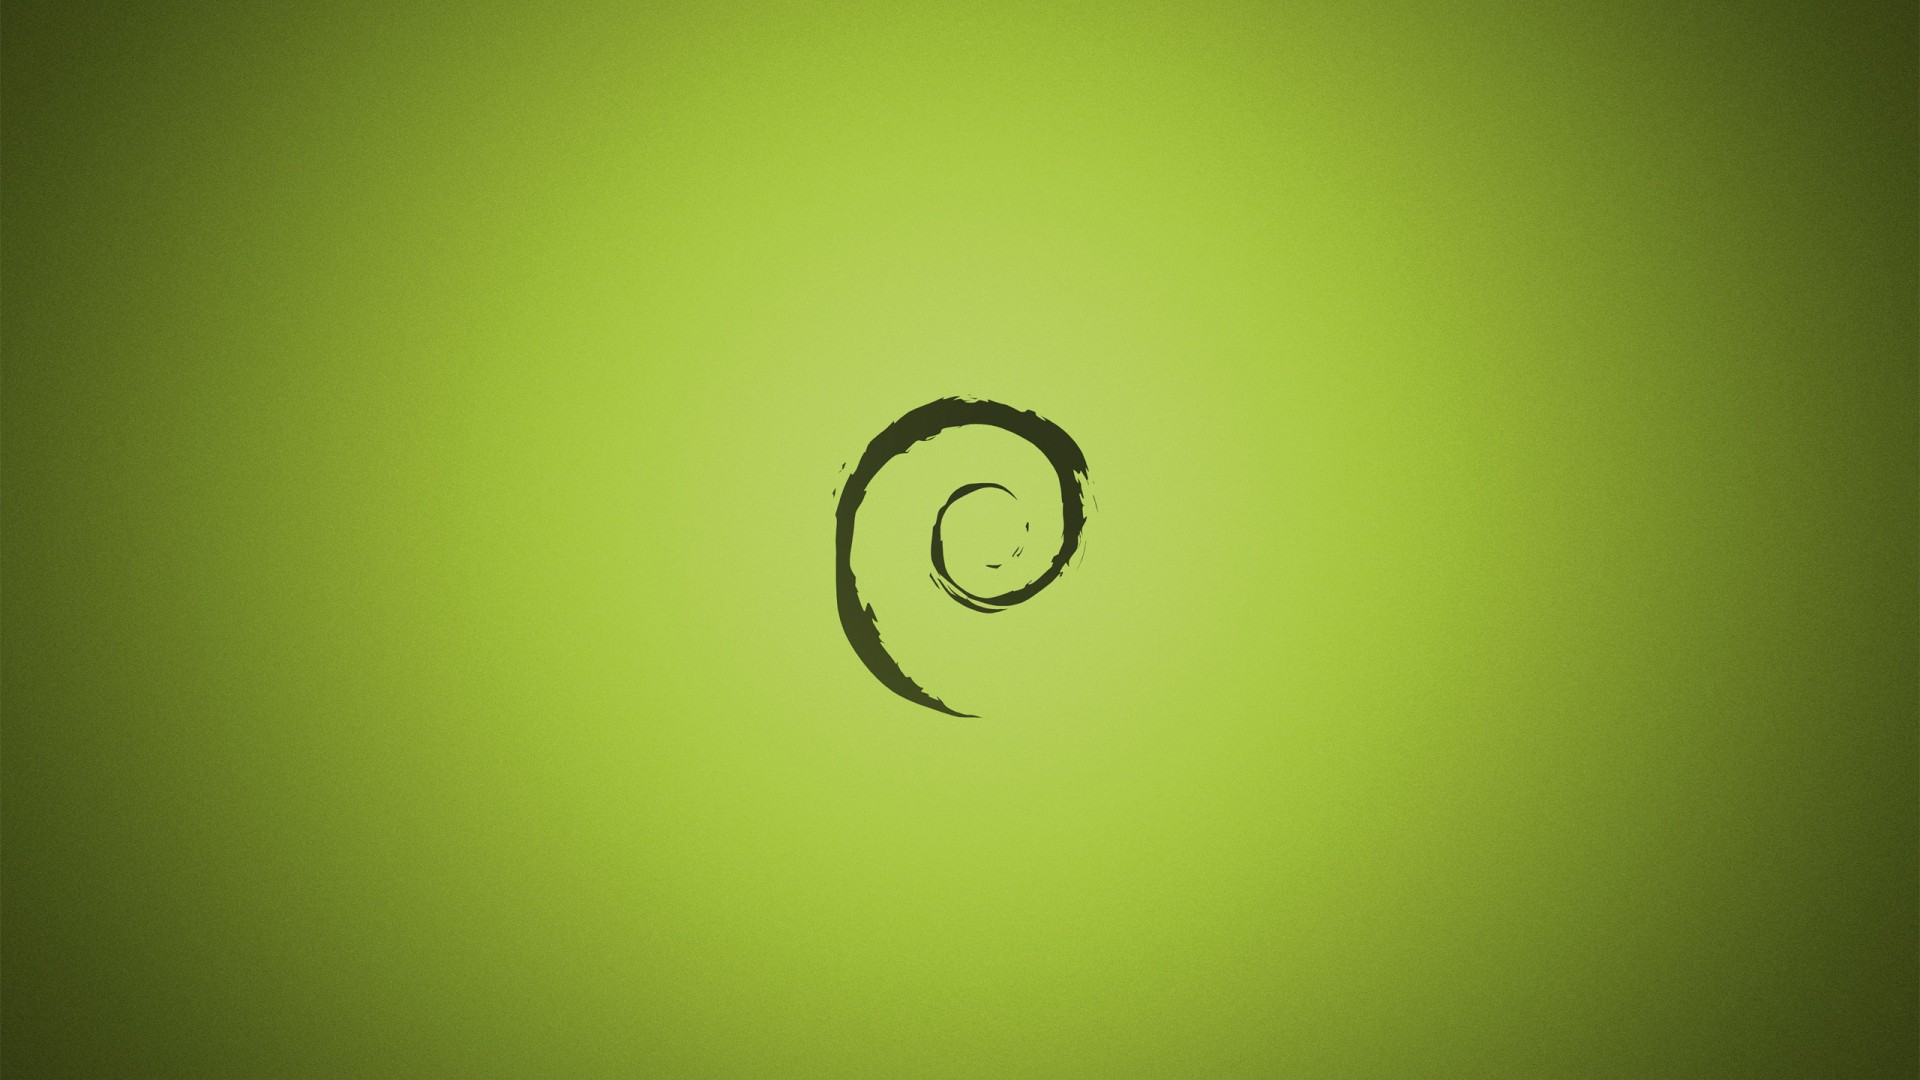 Green Debian Linux Minimalism Green Background Shapes Artwork Digital Art Debian 1920x1080